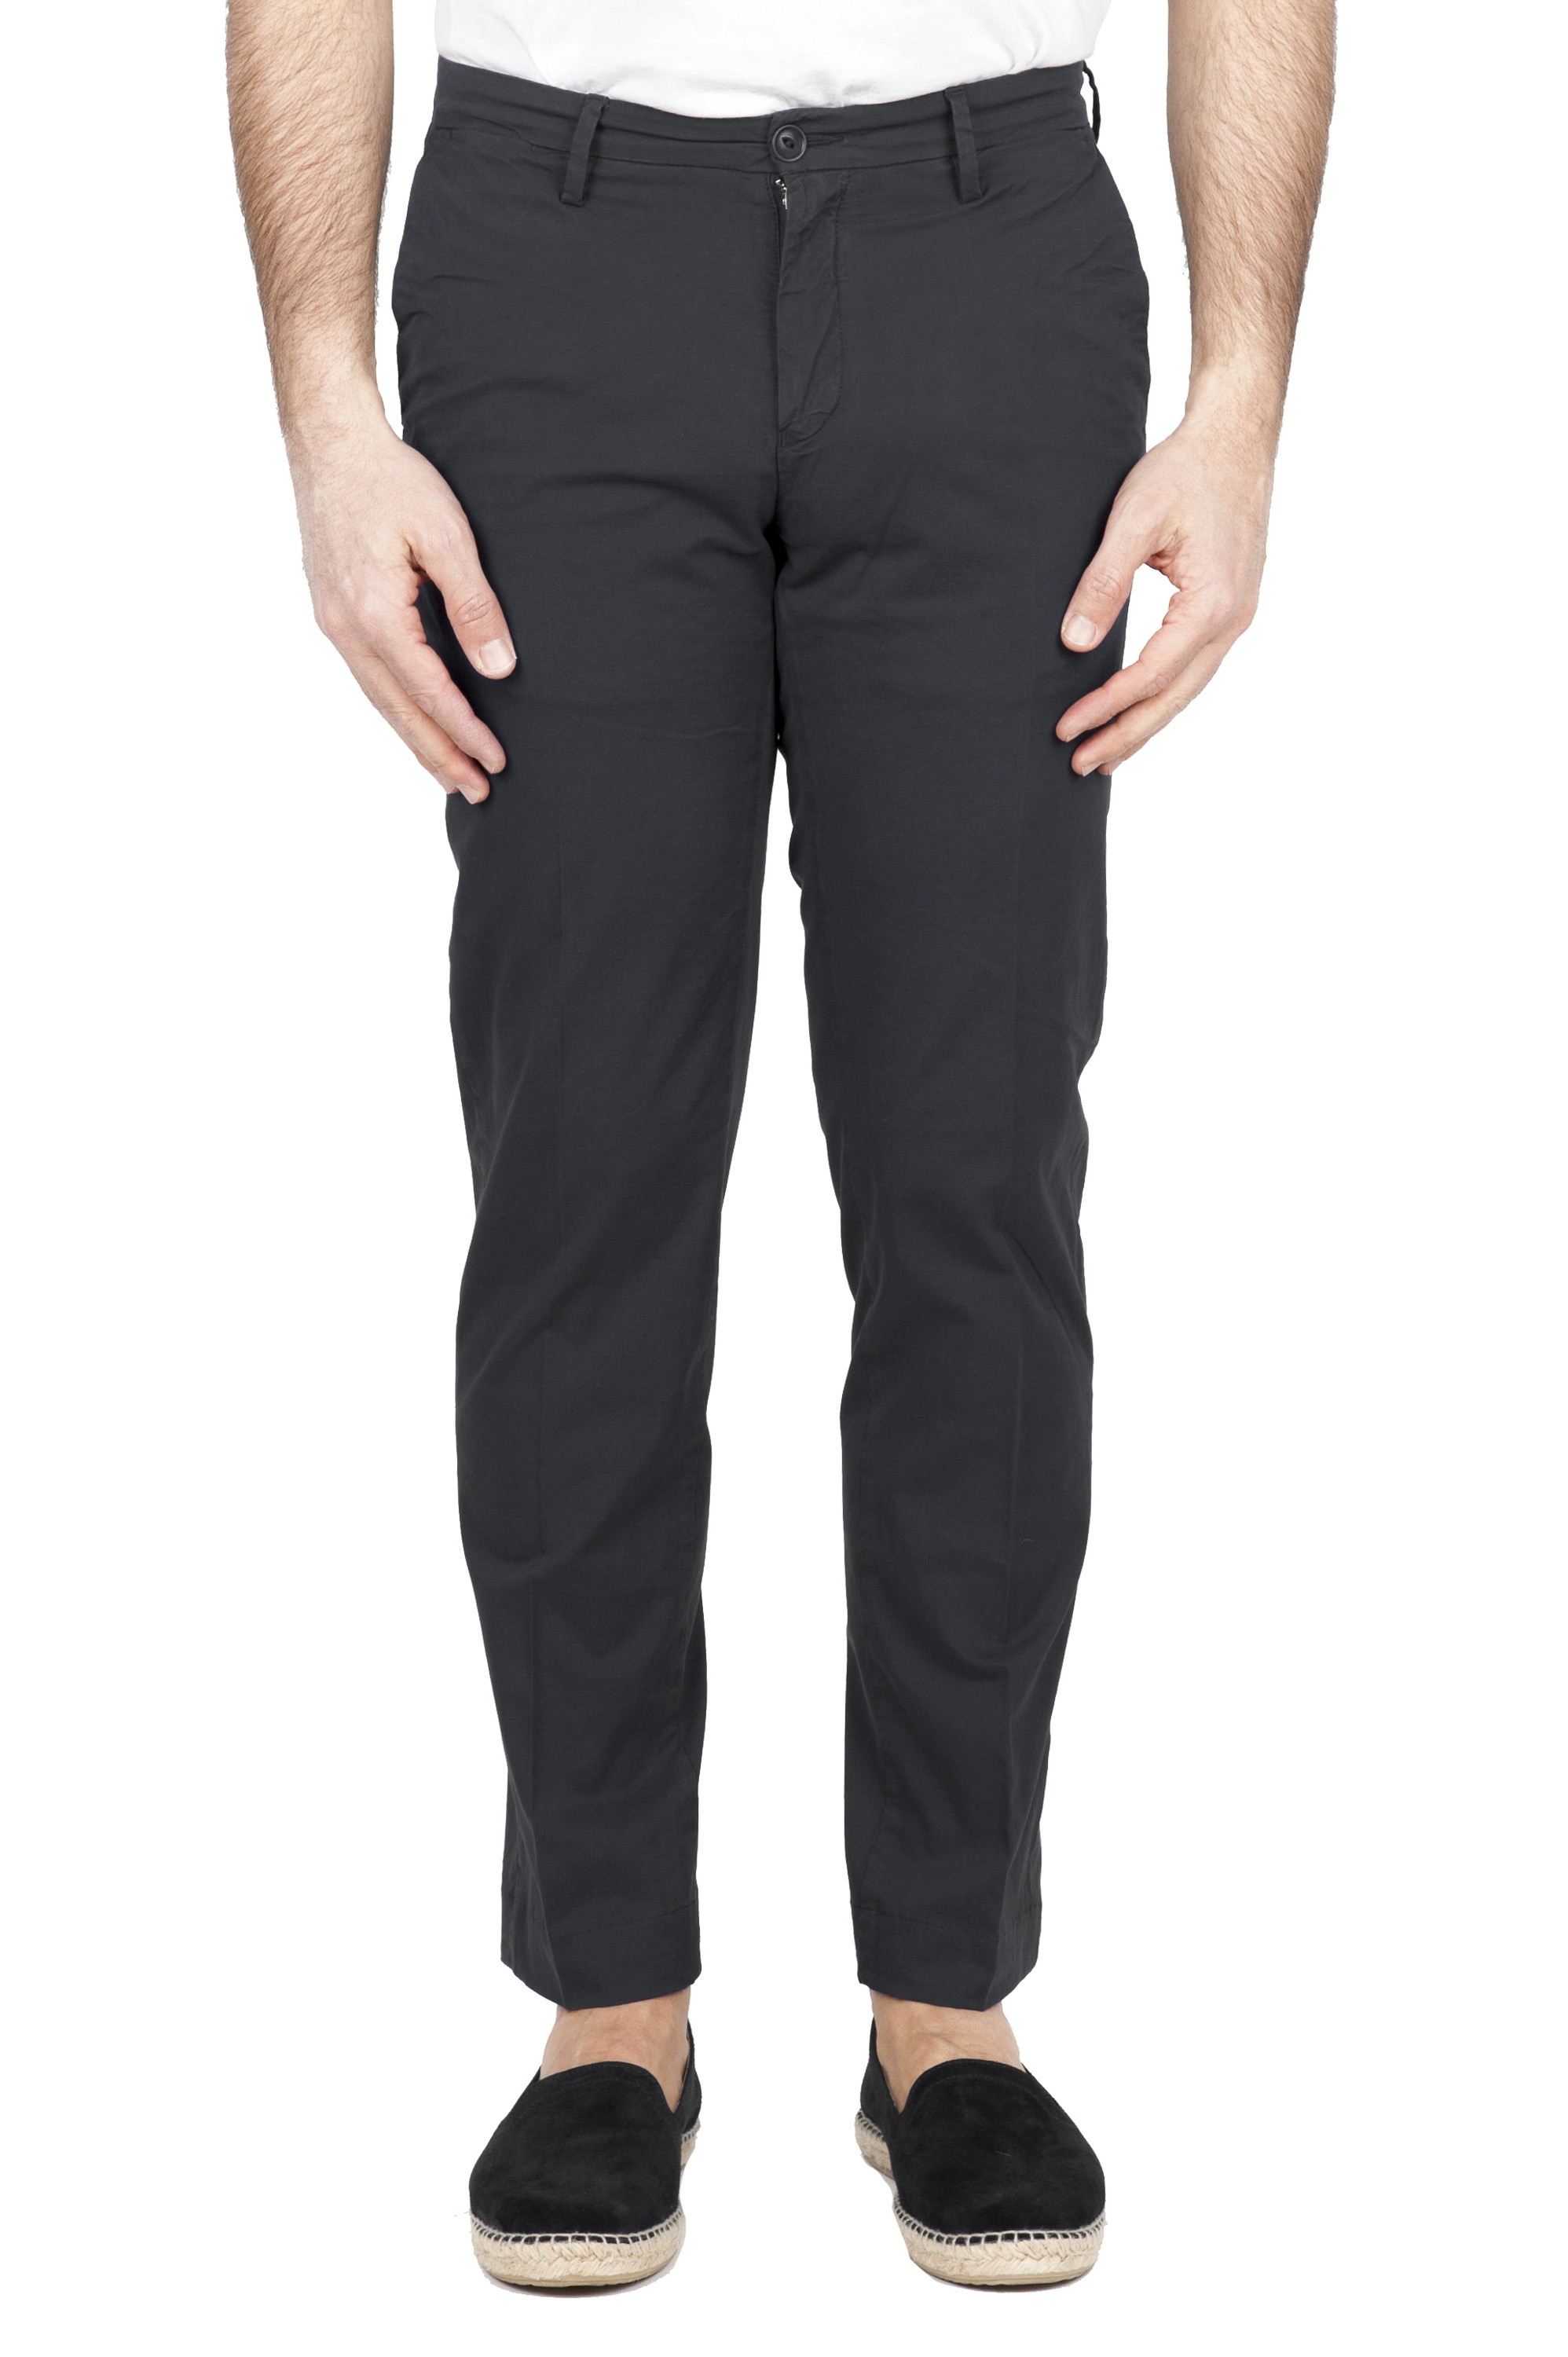 SBU 01681 Pantalon chino classique en coton stretch noir 01